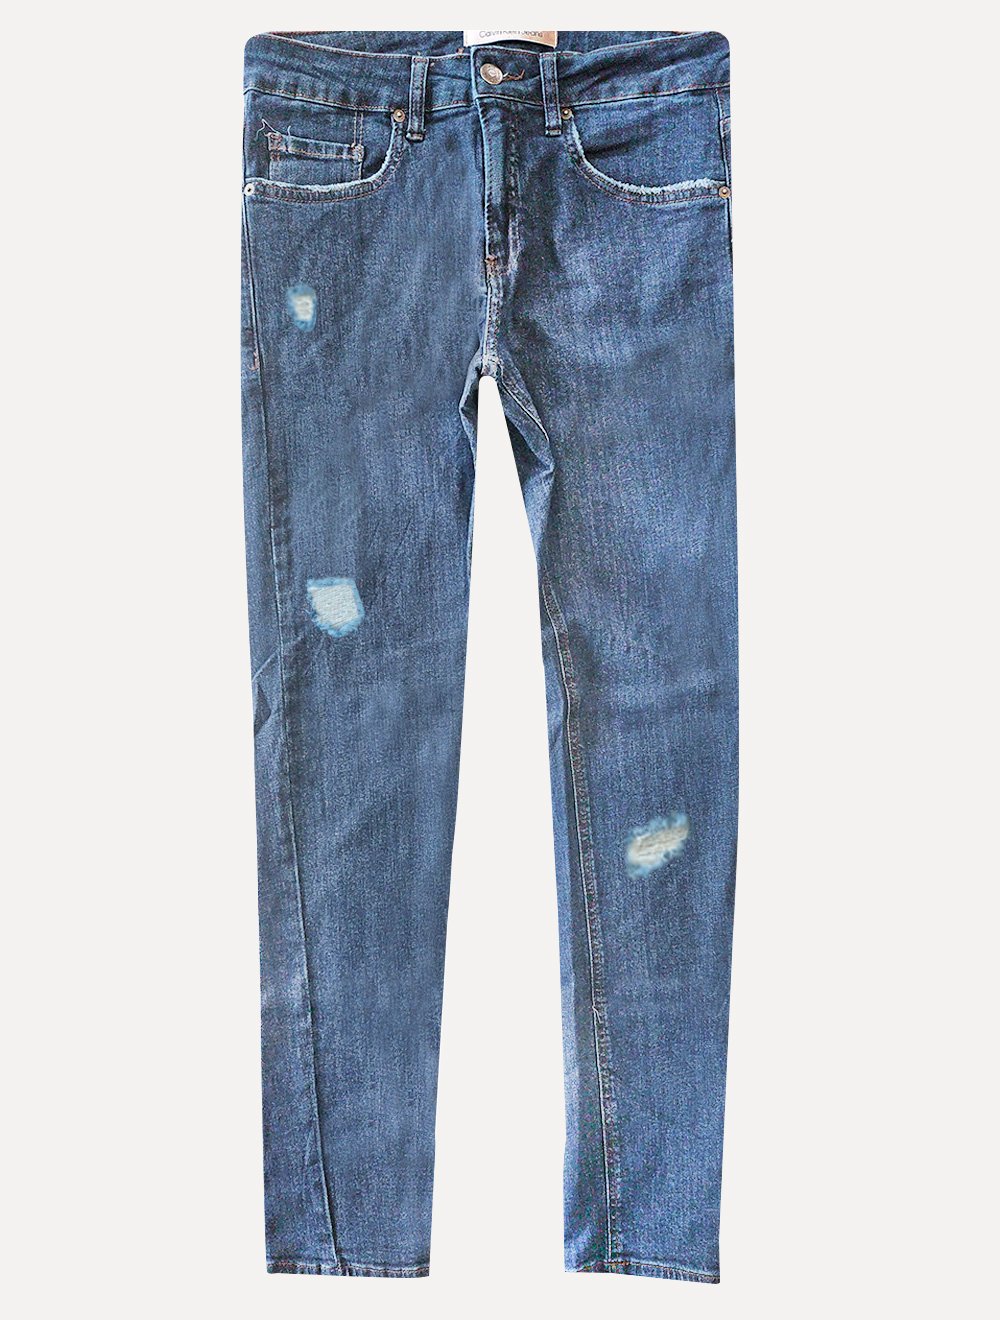 Calça Calvin Klein Jeans Masculina Stretch Destroyed Brown Tag Azul Marinho